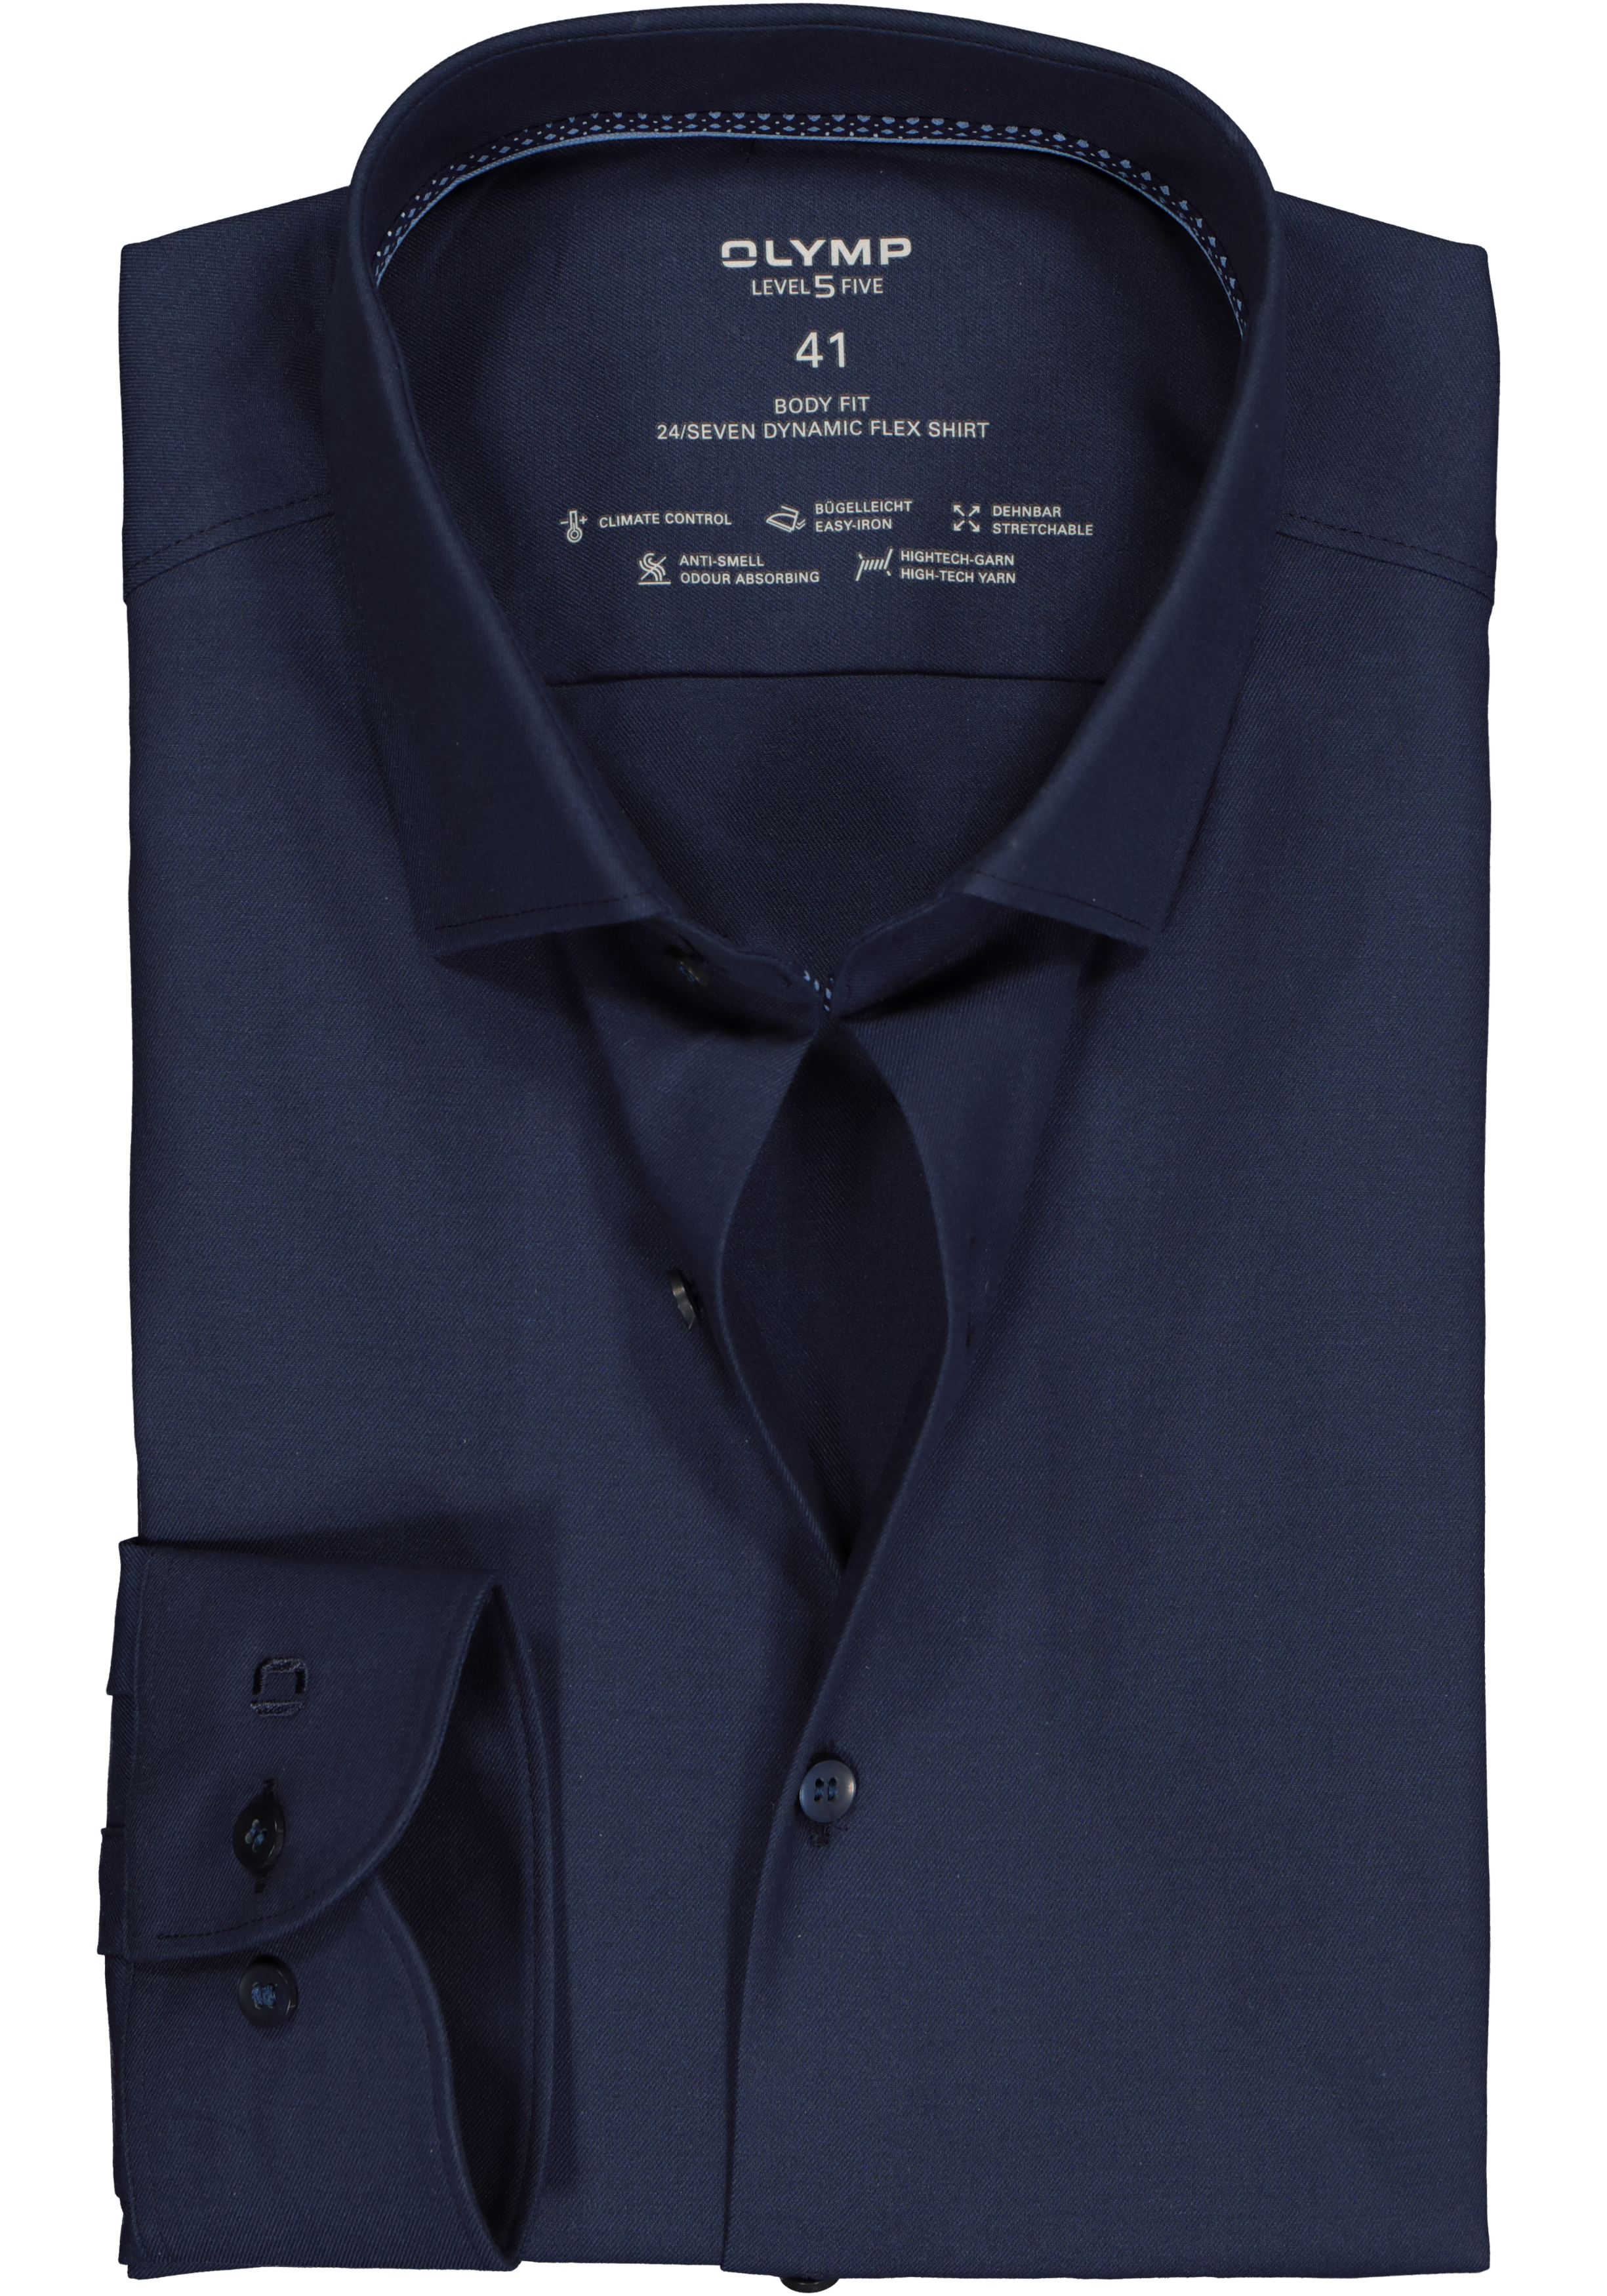 OLYMP 24/7 Level 5 body fit overhemd, twill, marine blauw (contrast)